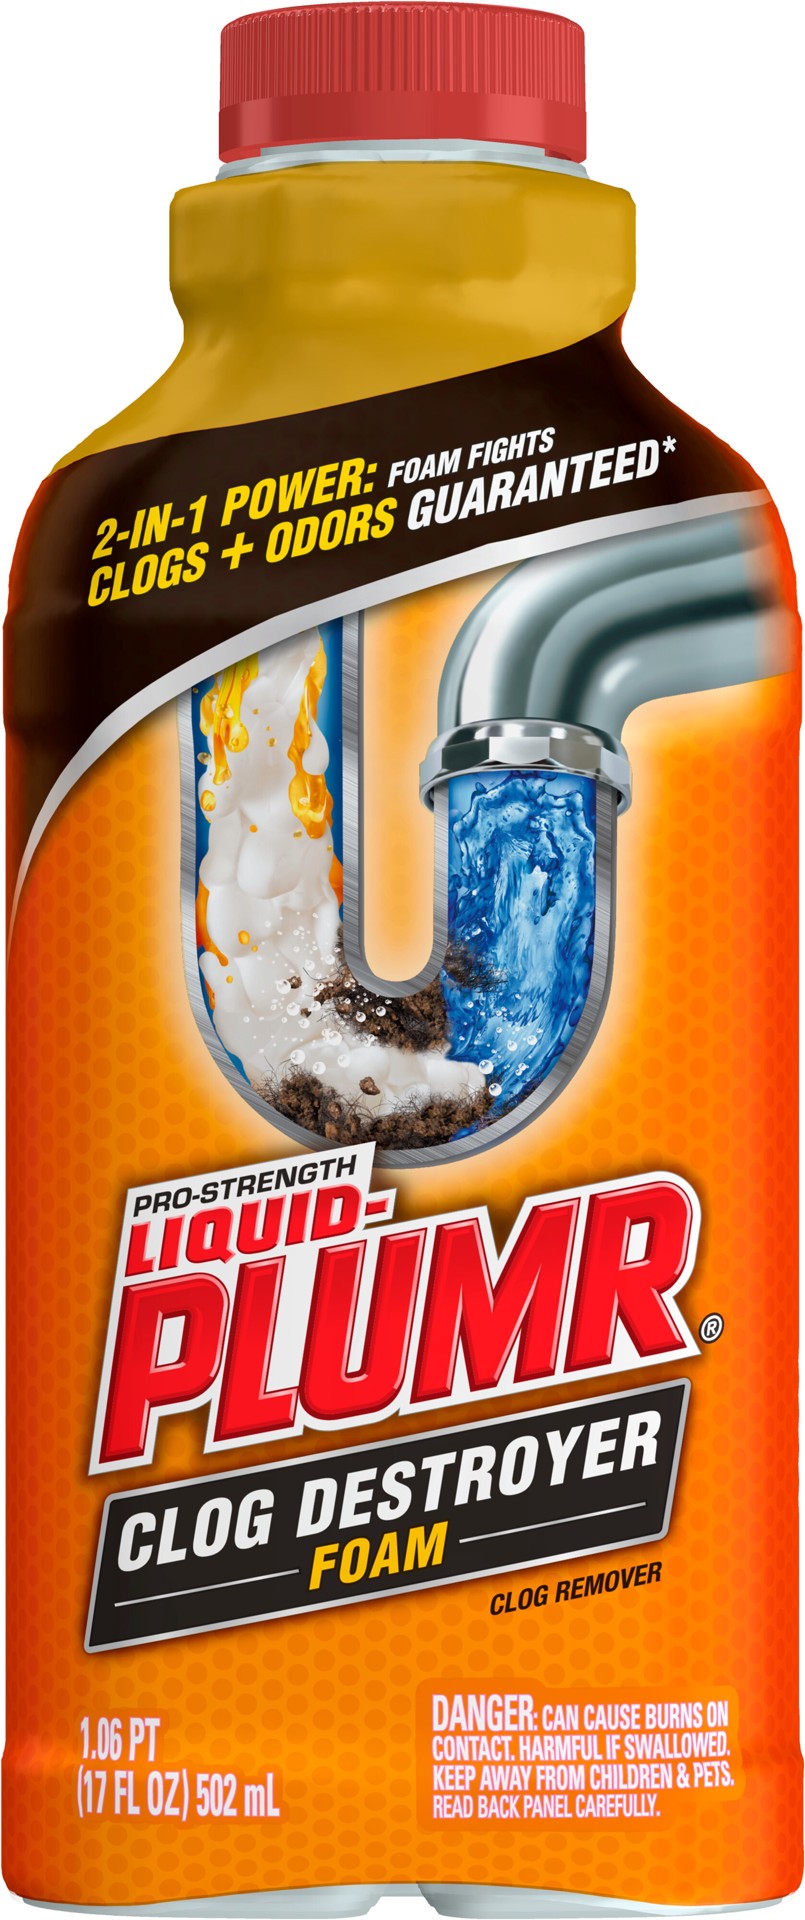 slide 1 of 5, Liquid-Plumr Pro-Strength Clog Destroyer Plus Clog Destroyer Foam, Foaming Drain Cleaner, 17 Ounces, 17 fl oz